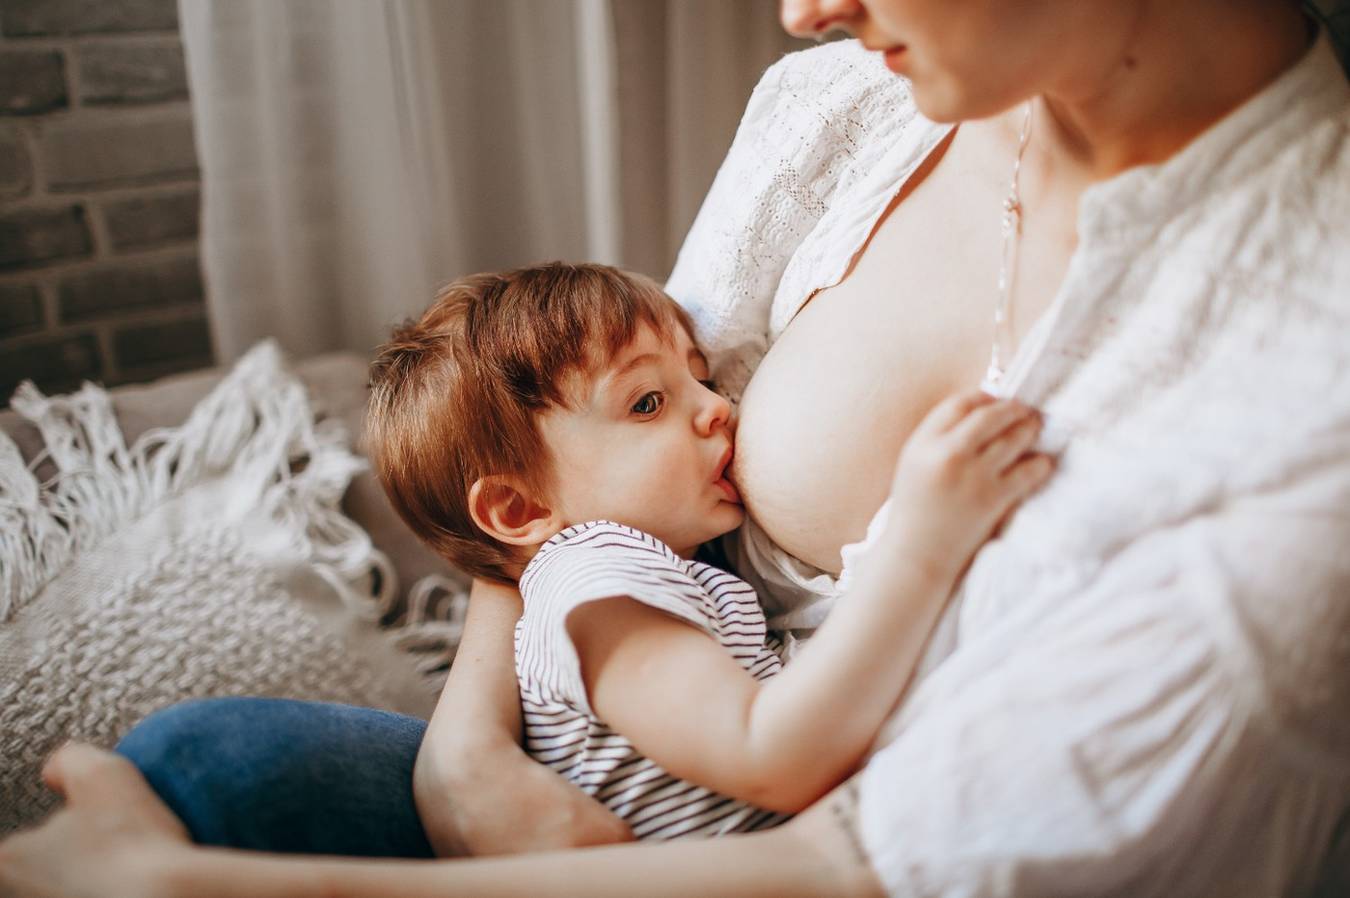 Breastfeeding Position